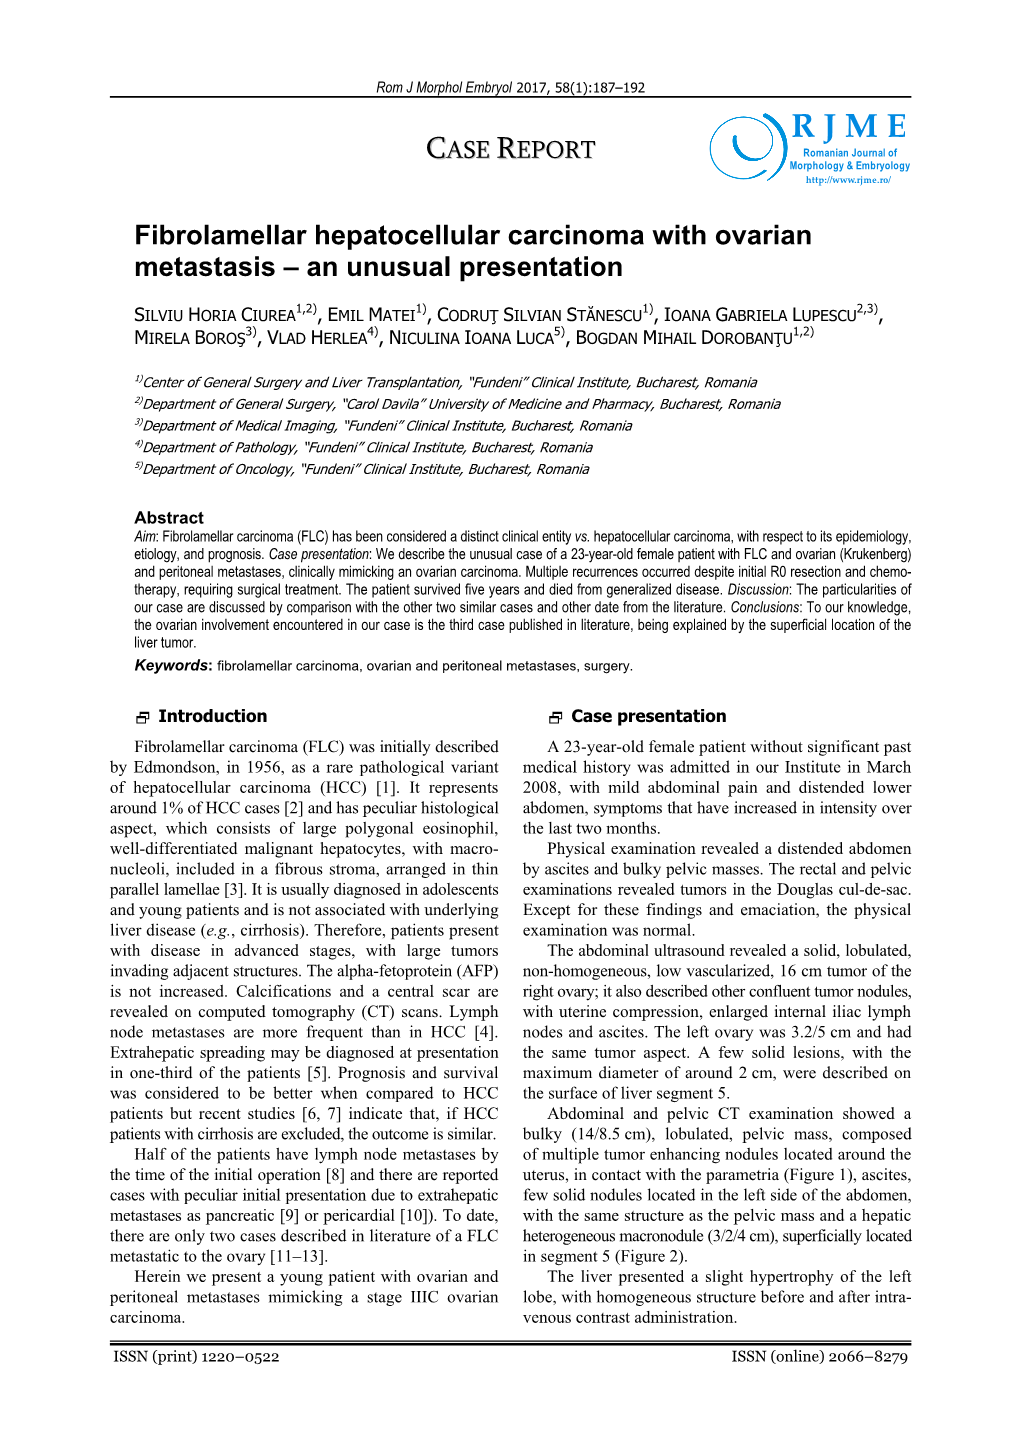 Fibrolamellar Hepatocellular Carcinoma with Ovarian Metastasis – an Unusual Presentation